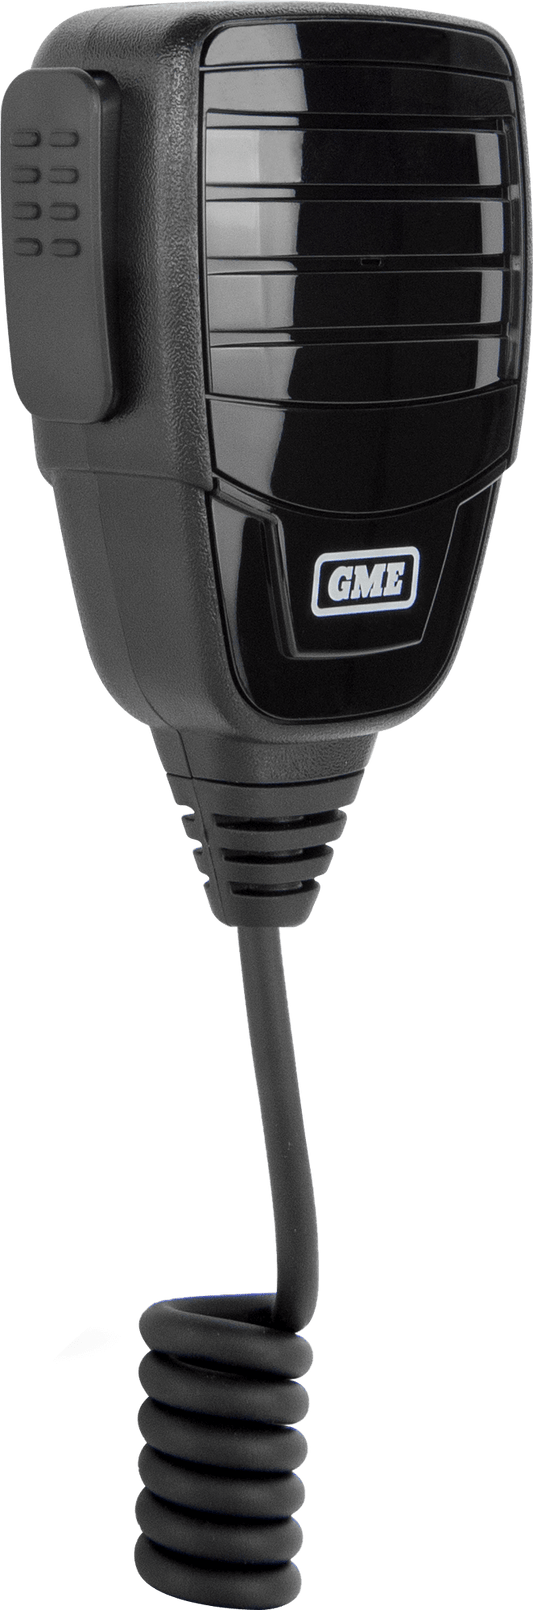 MC557B Heavy Duty GME Microphone